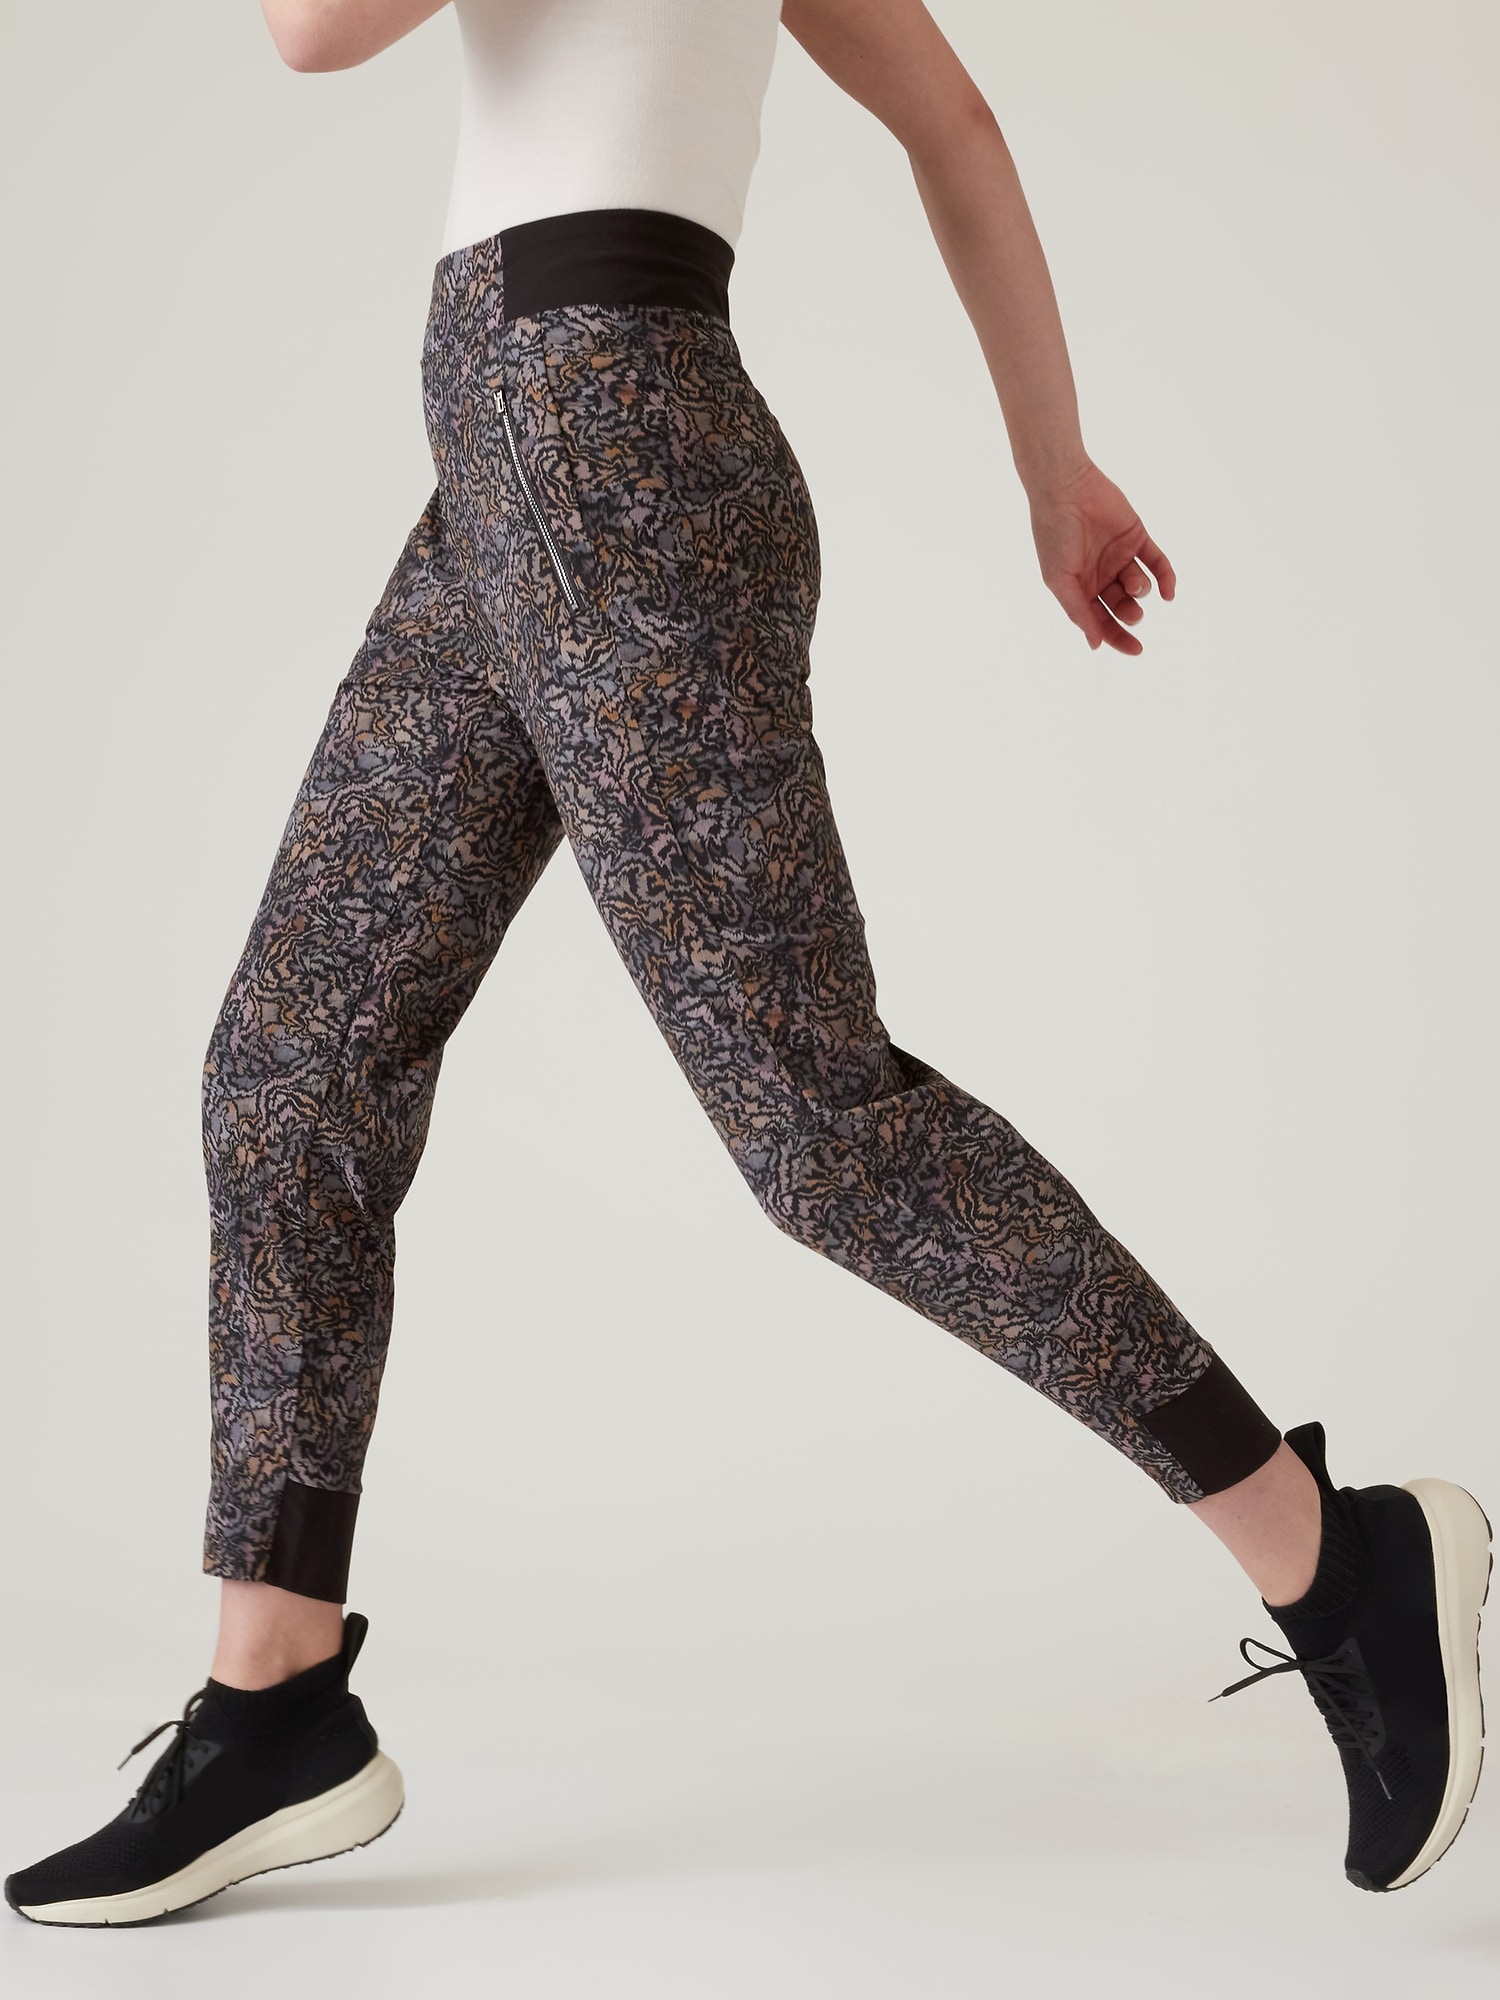 Buy JOCKEY Weft_blue Polyester Spandex Womens Activewear Track Pants